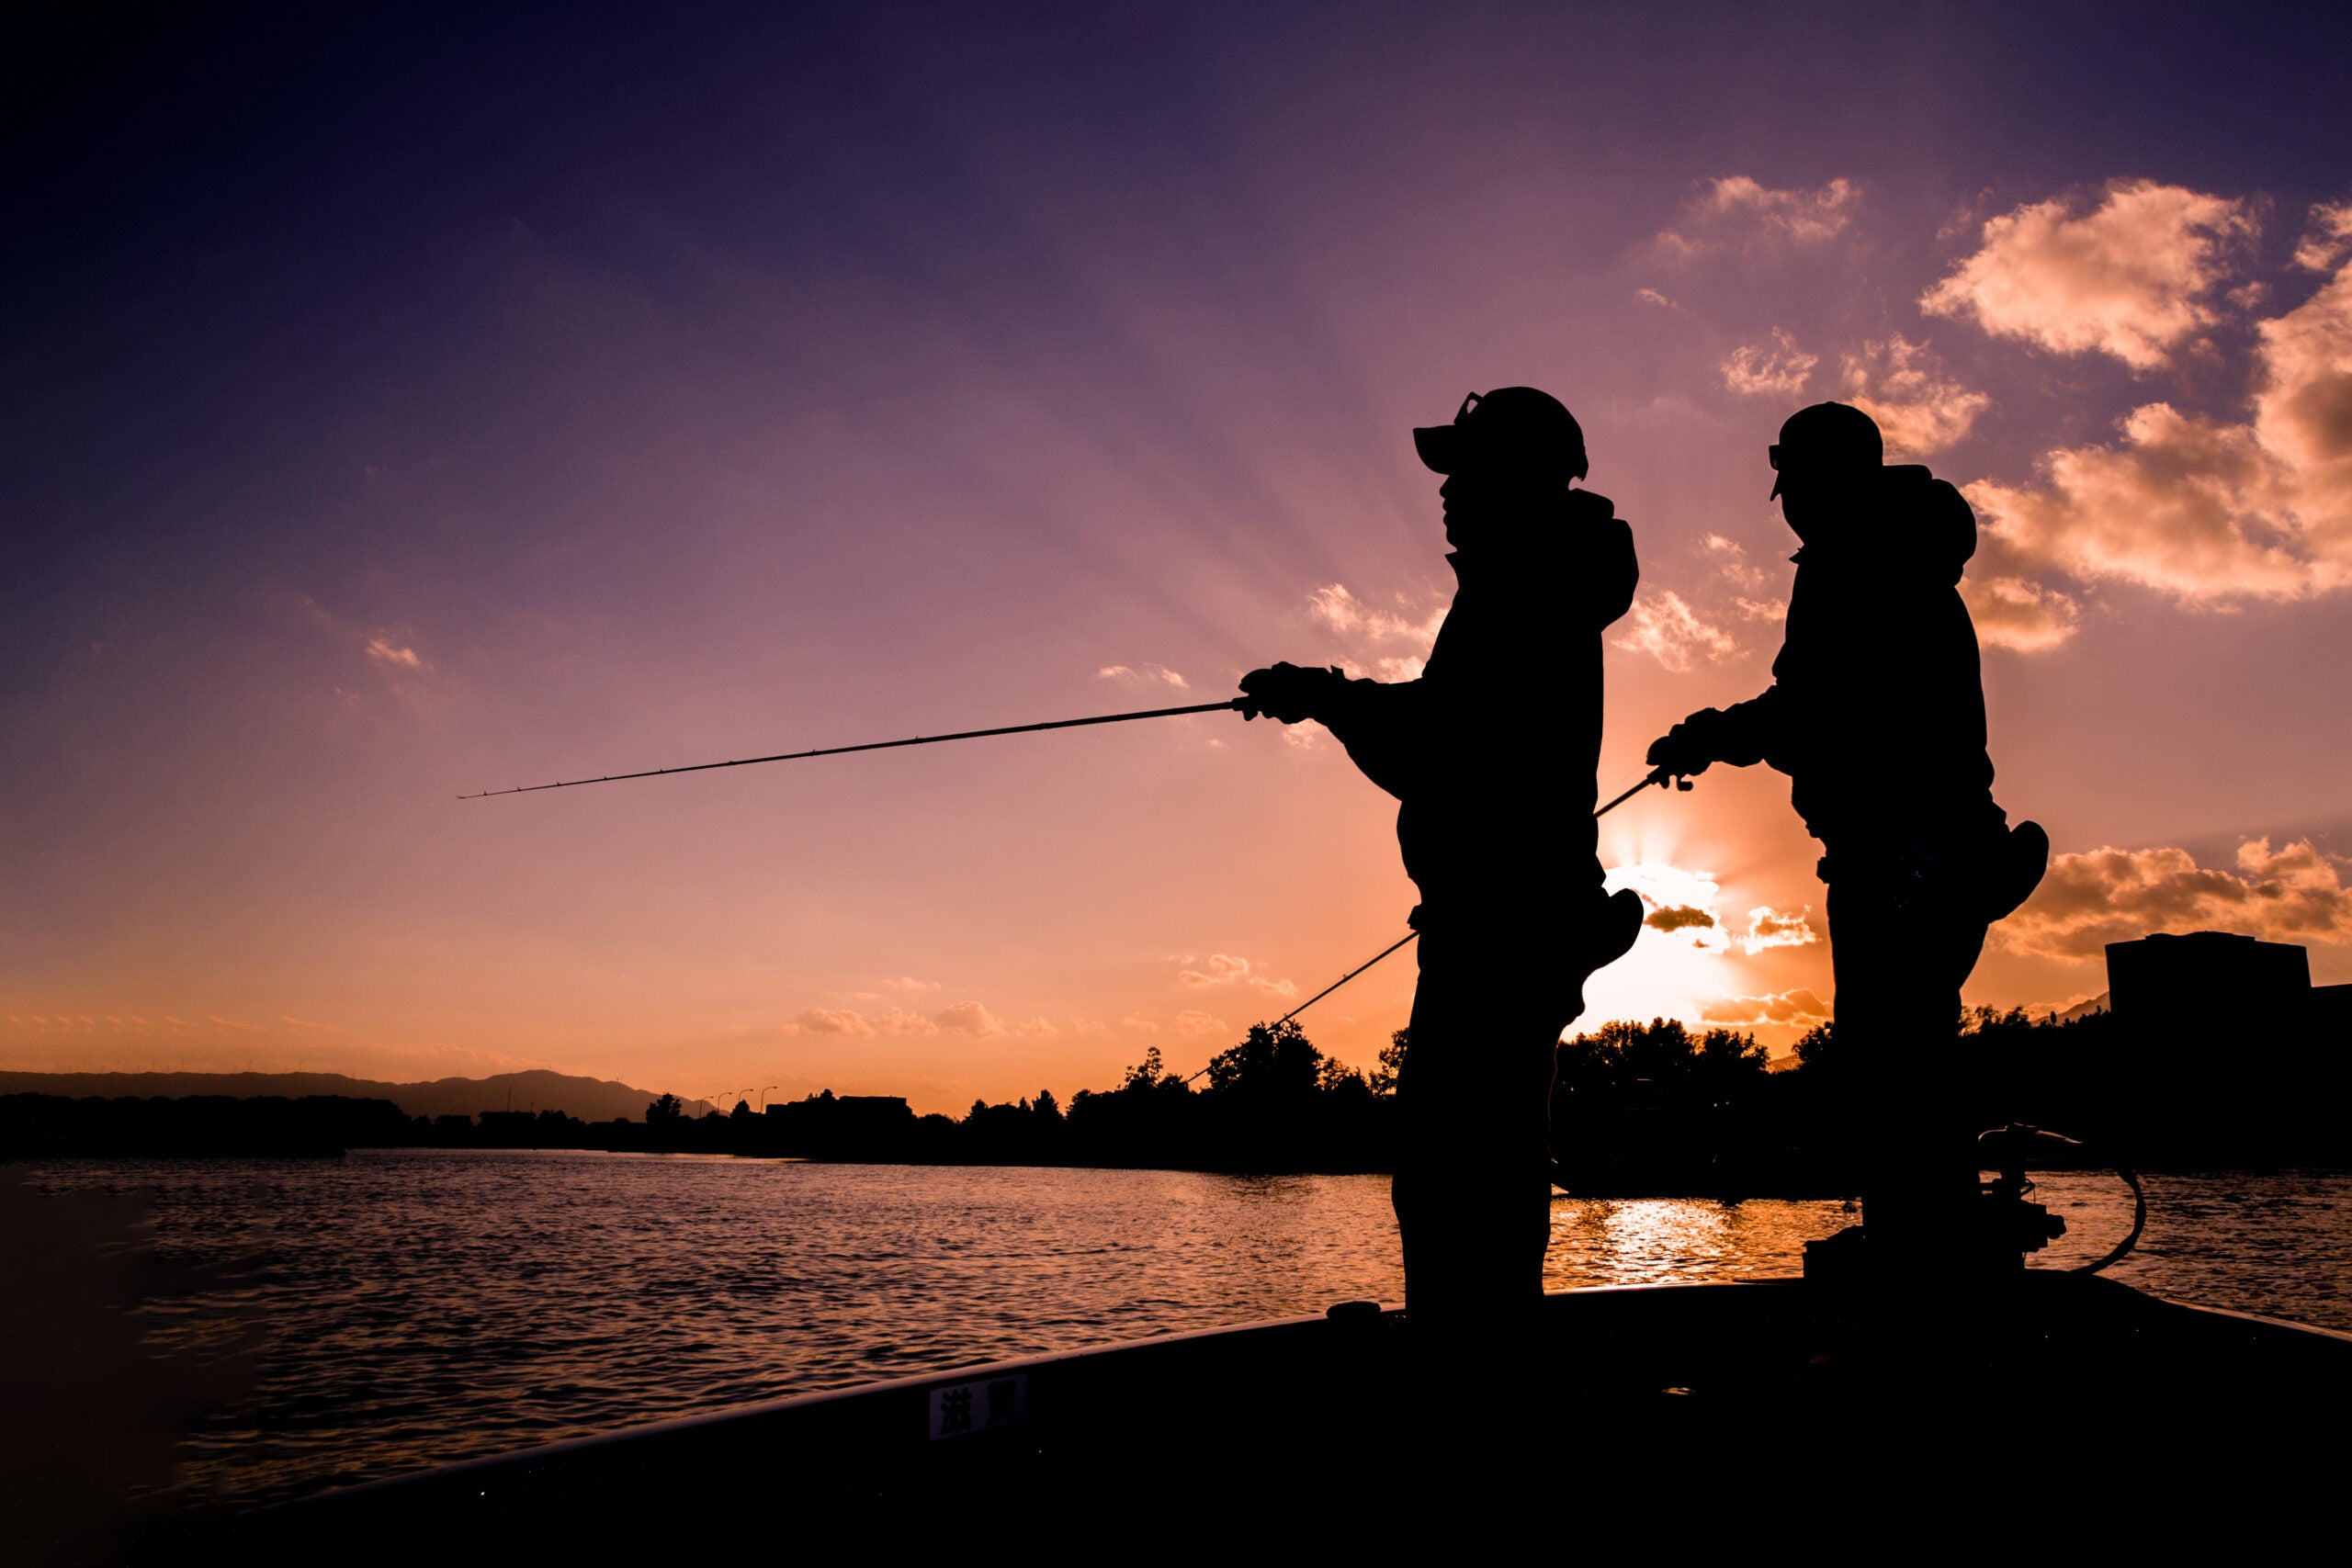 summer anglers fishing for bass at dusk